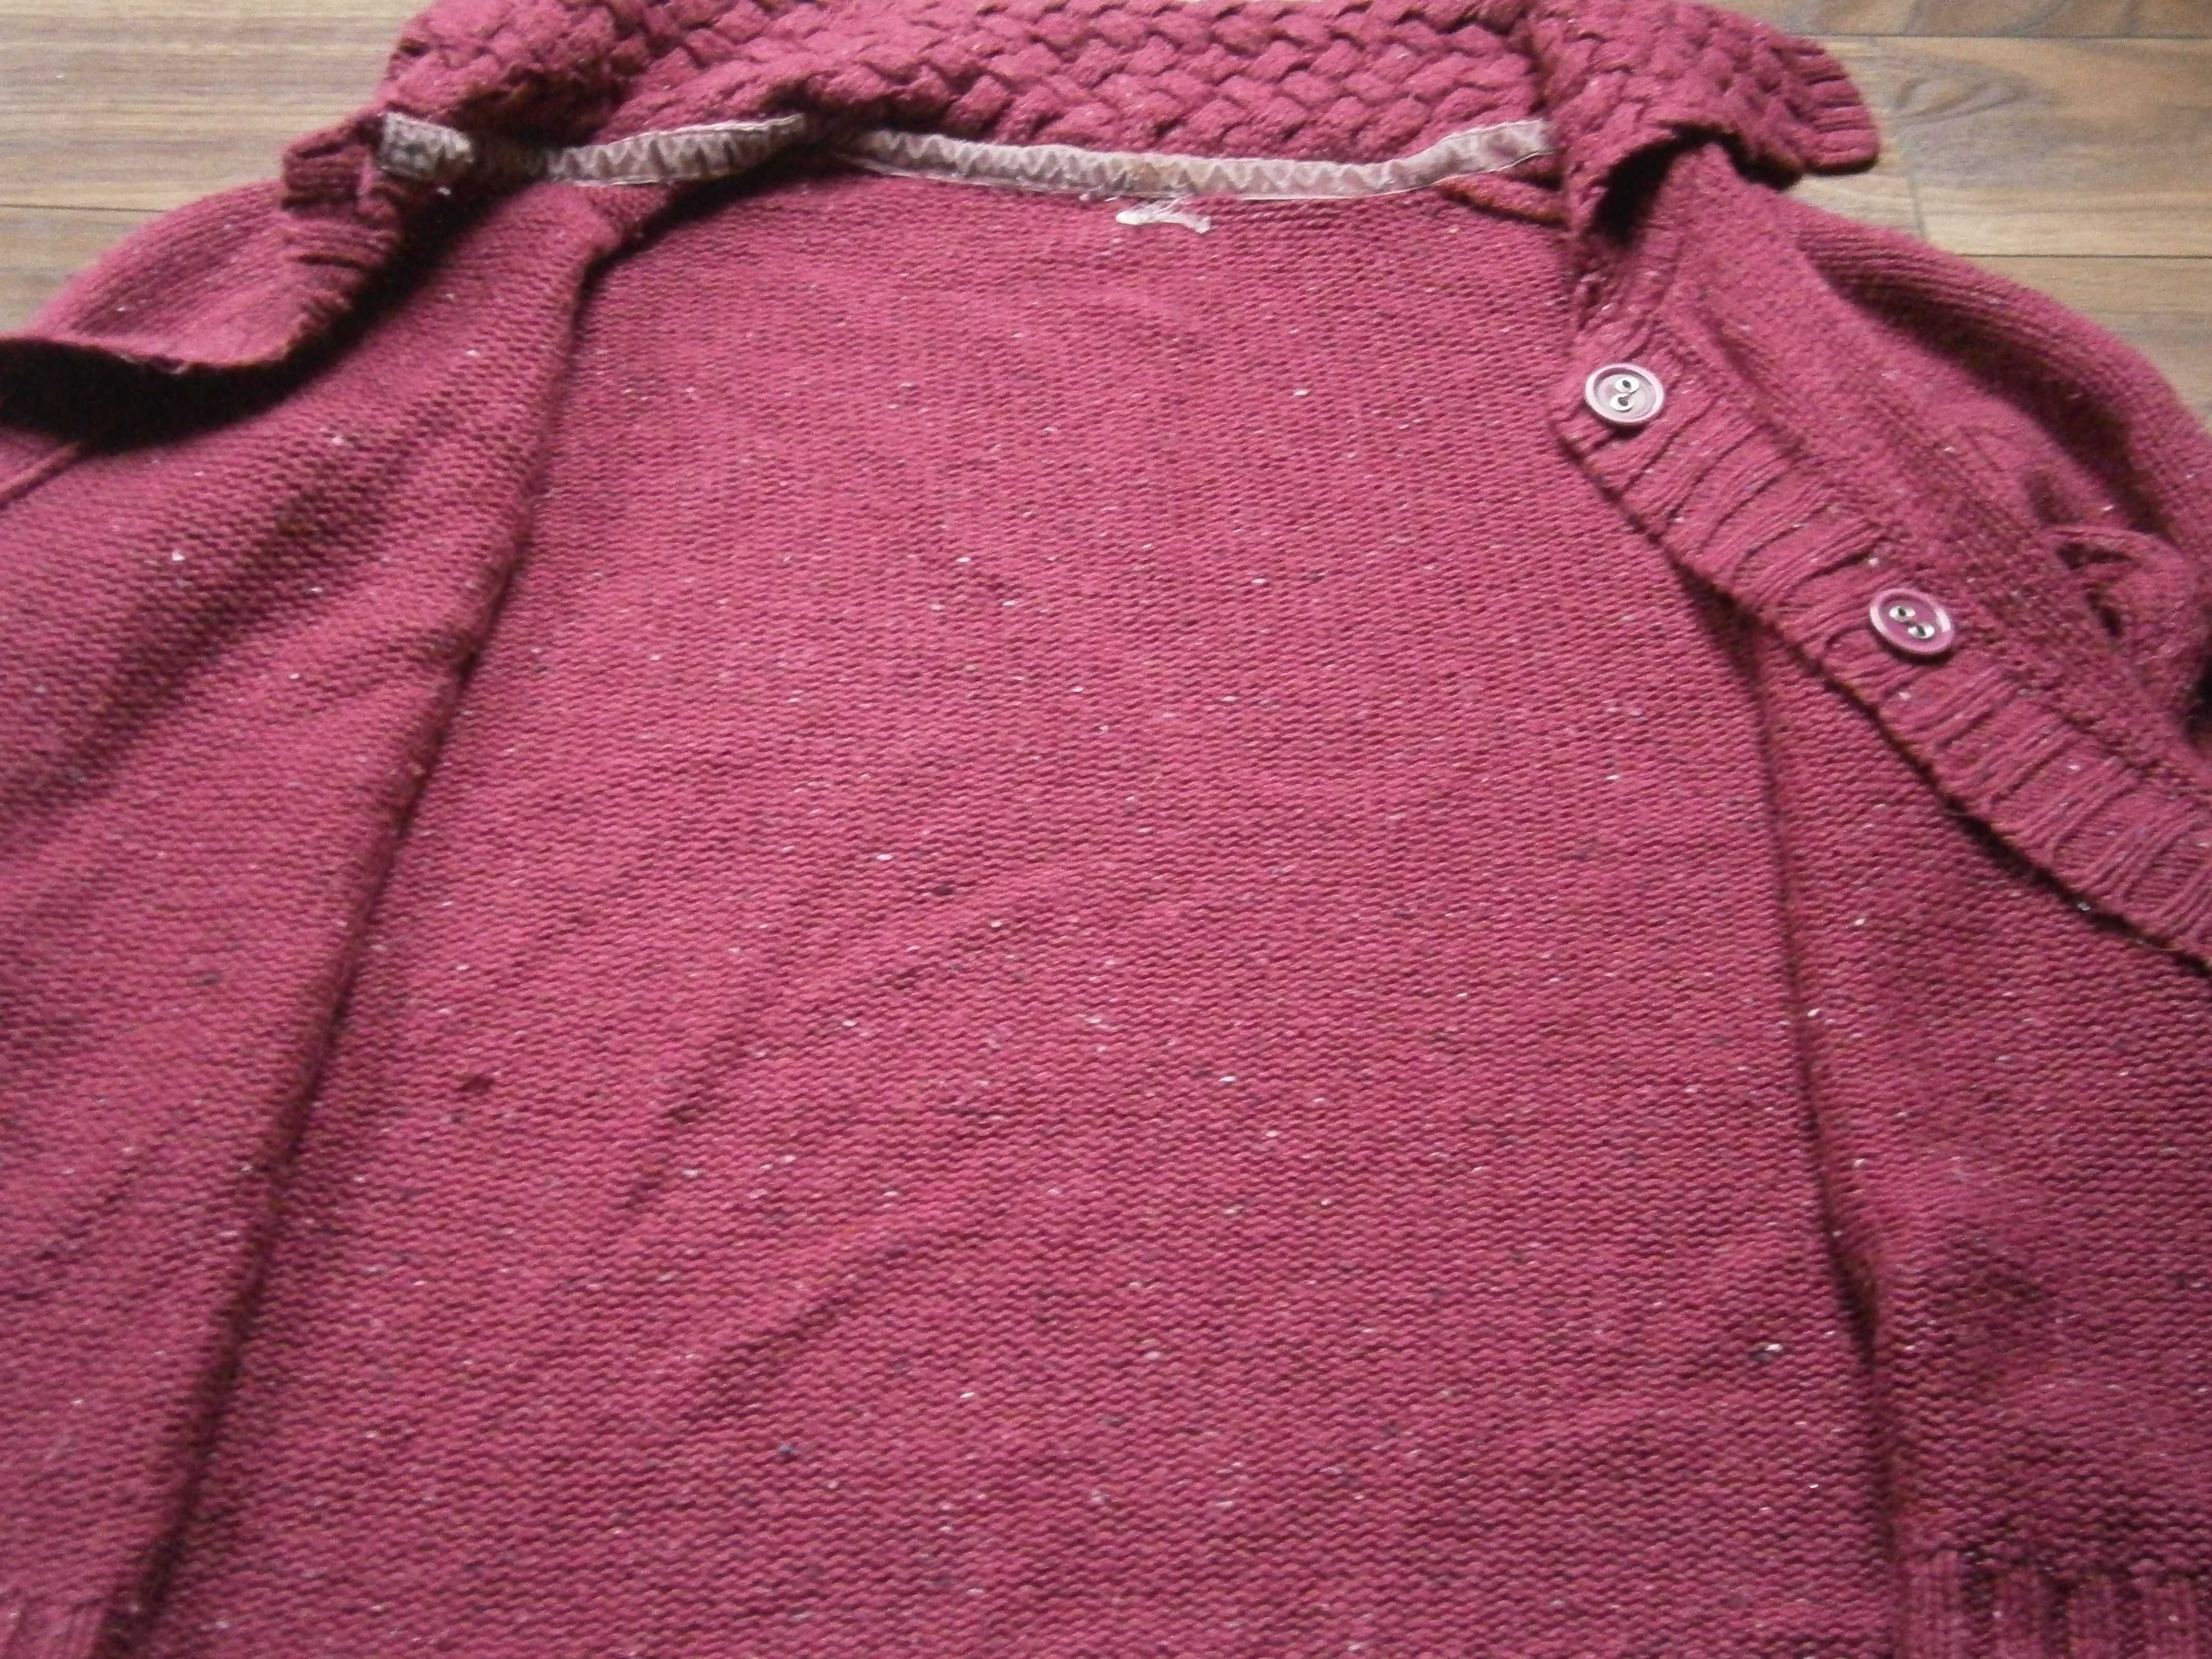 Sweterek M L purpurowy zapinany na guziki sweter